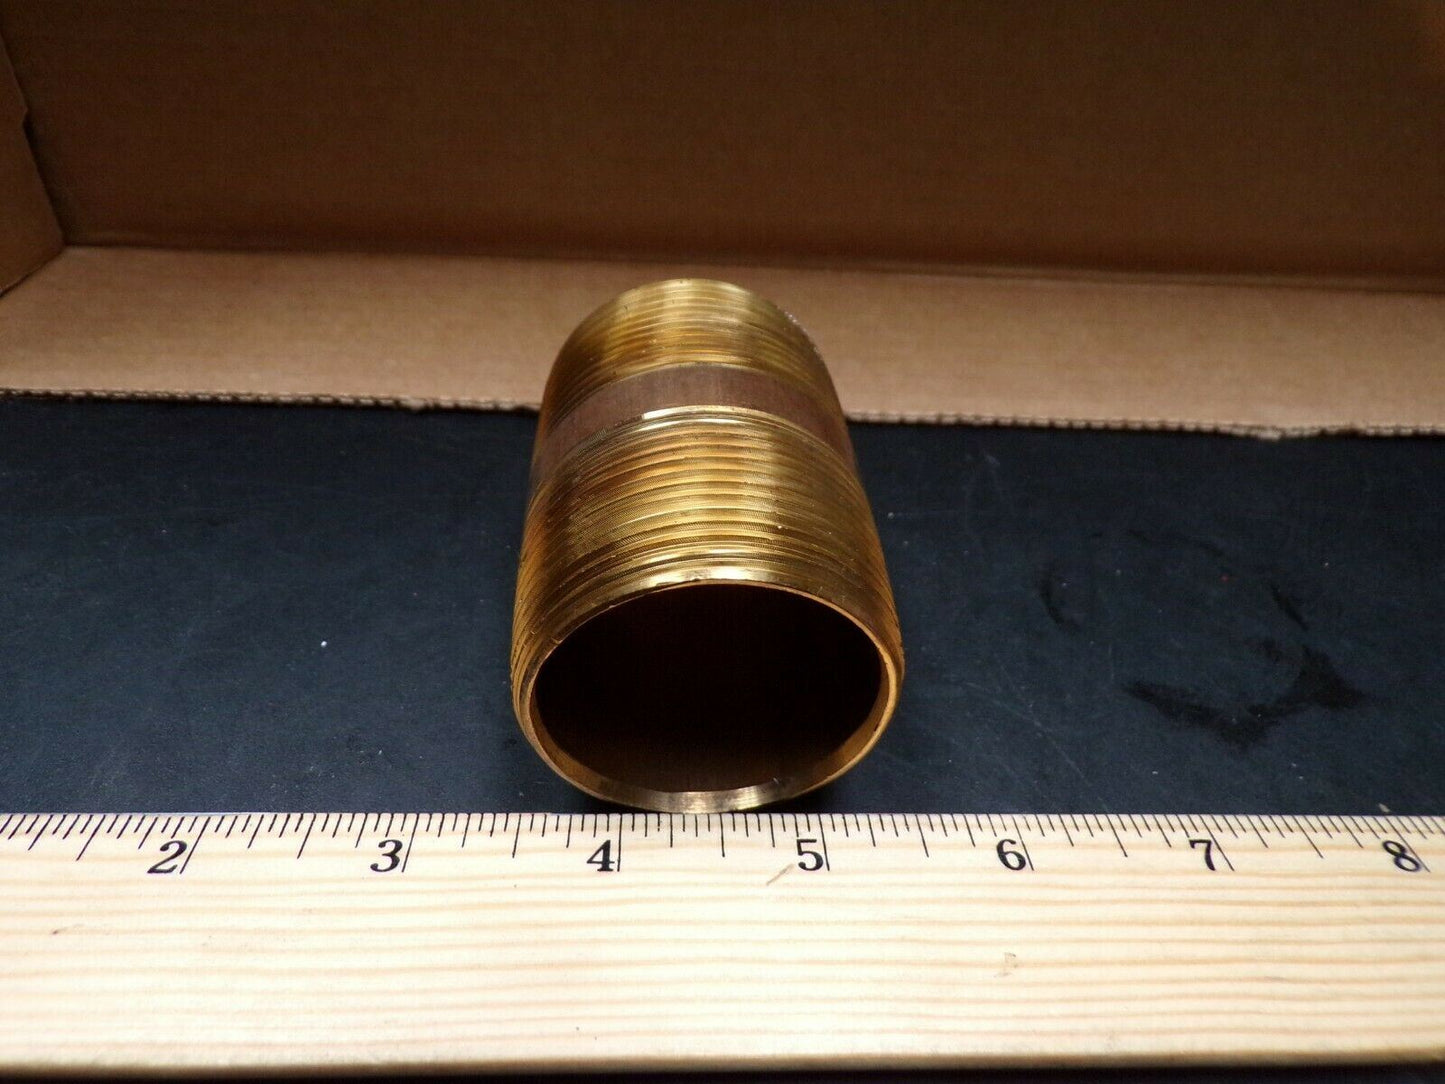 1-1/2" x 2-1/2" Red Brass Pipe Nipple, Pipe Nipple, 10E697, (183860862558-NBT30)